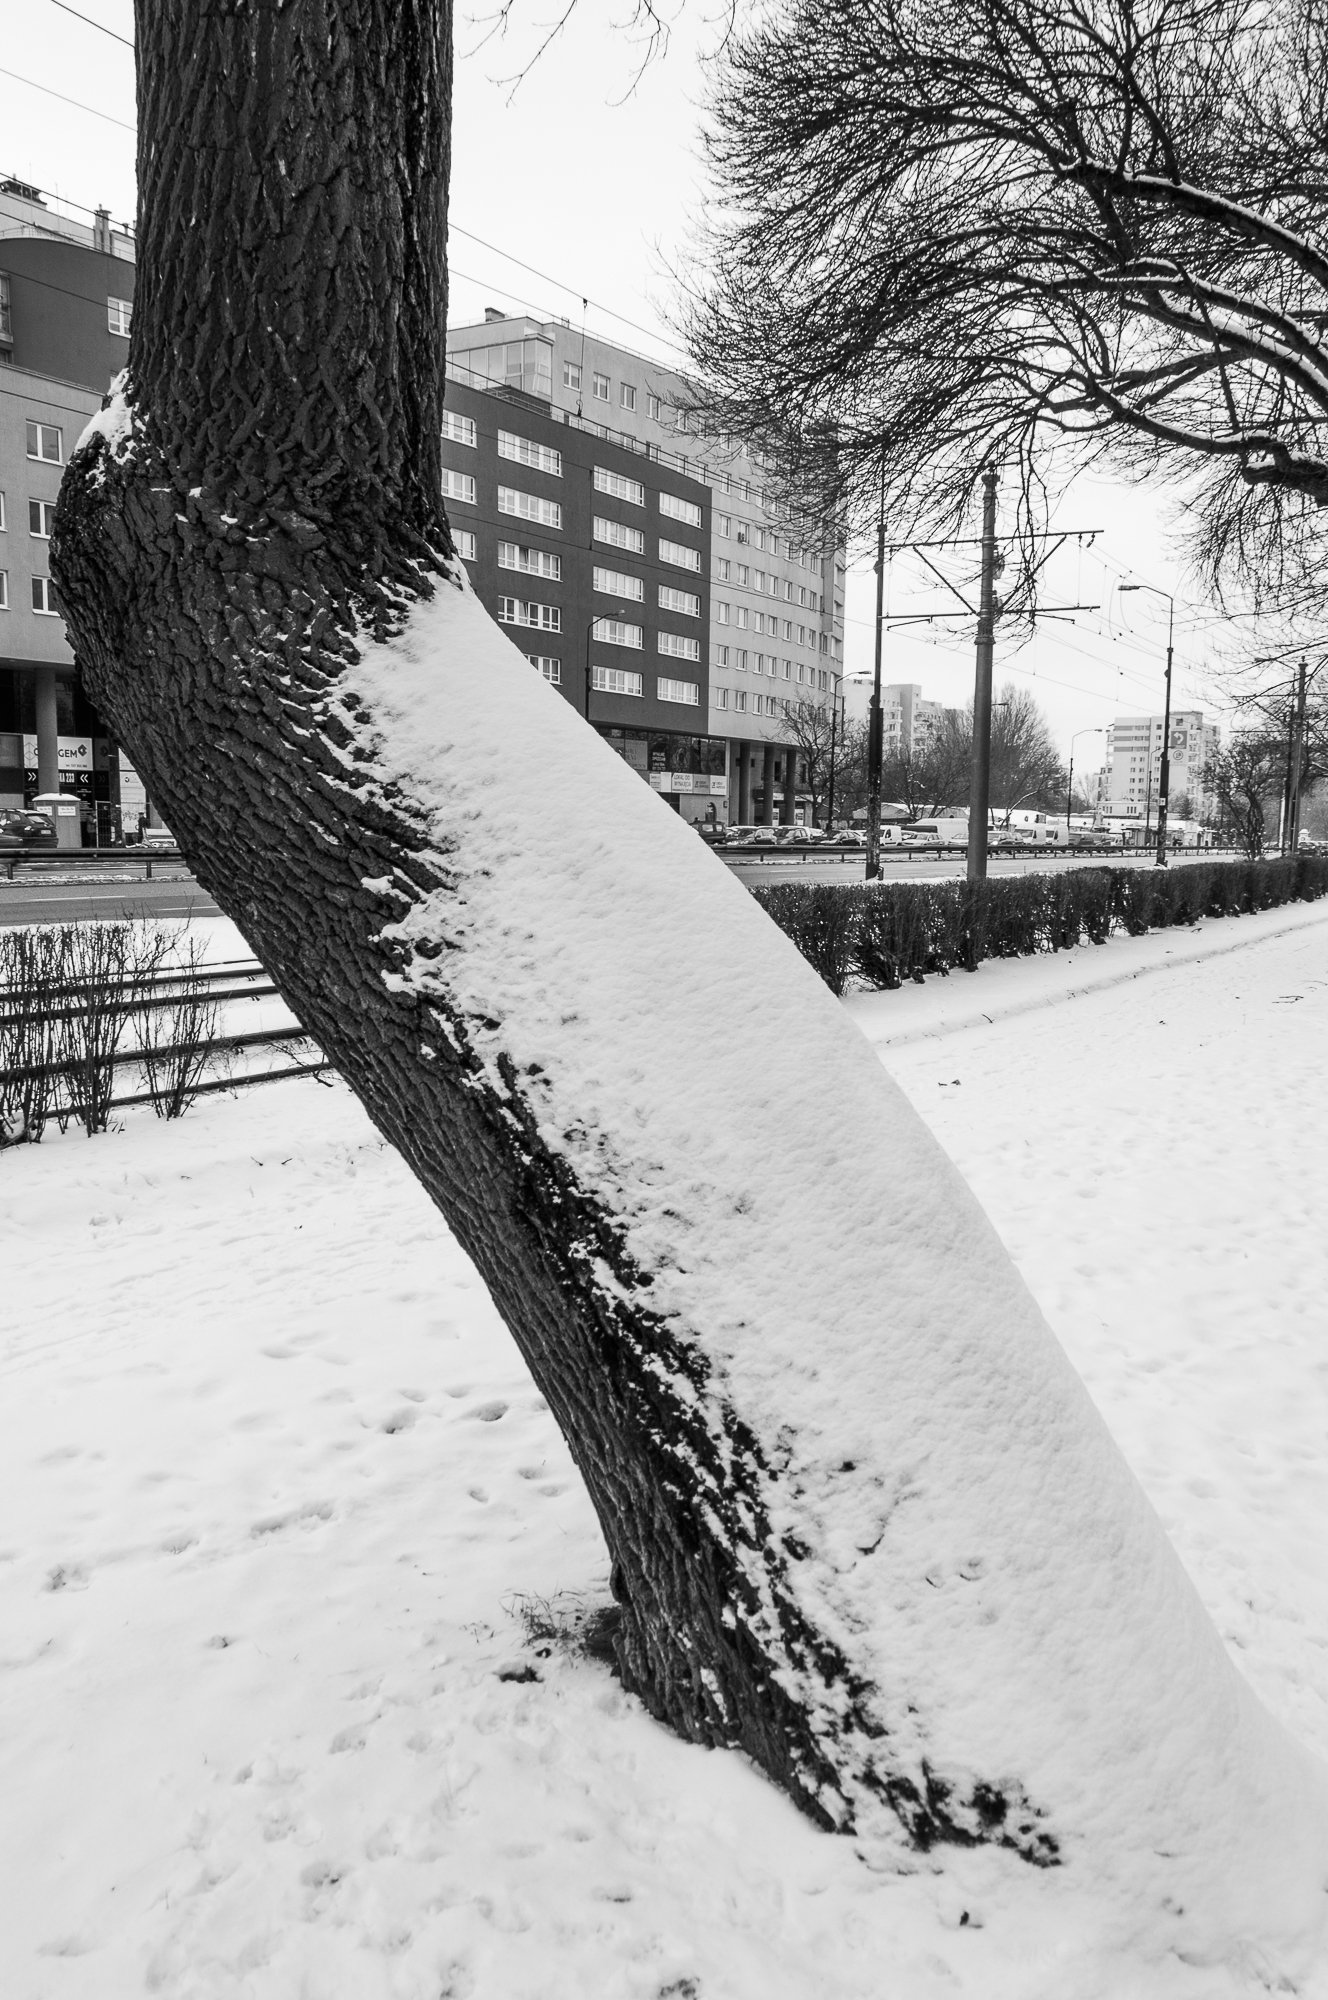 Adam Mazek Photography Warsaw (Warszawa) 2019. Post: "Daylight Saving Time." Snow tree. Minimalism.